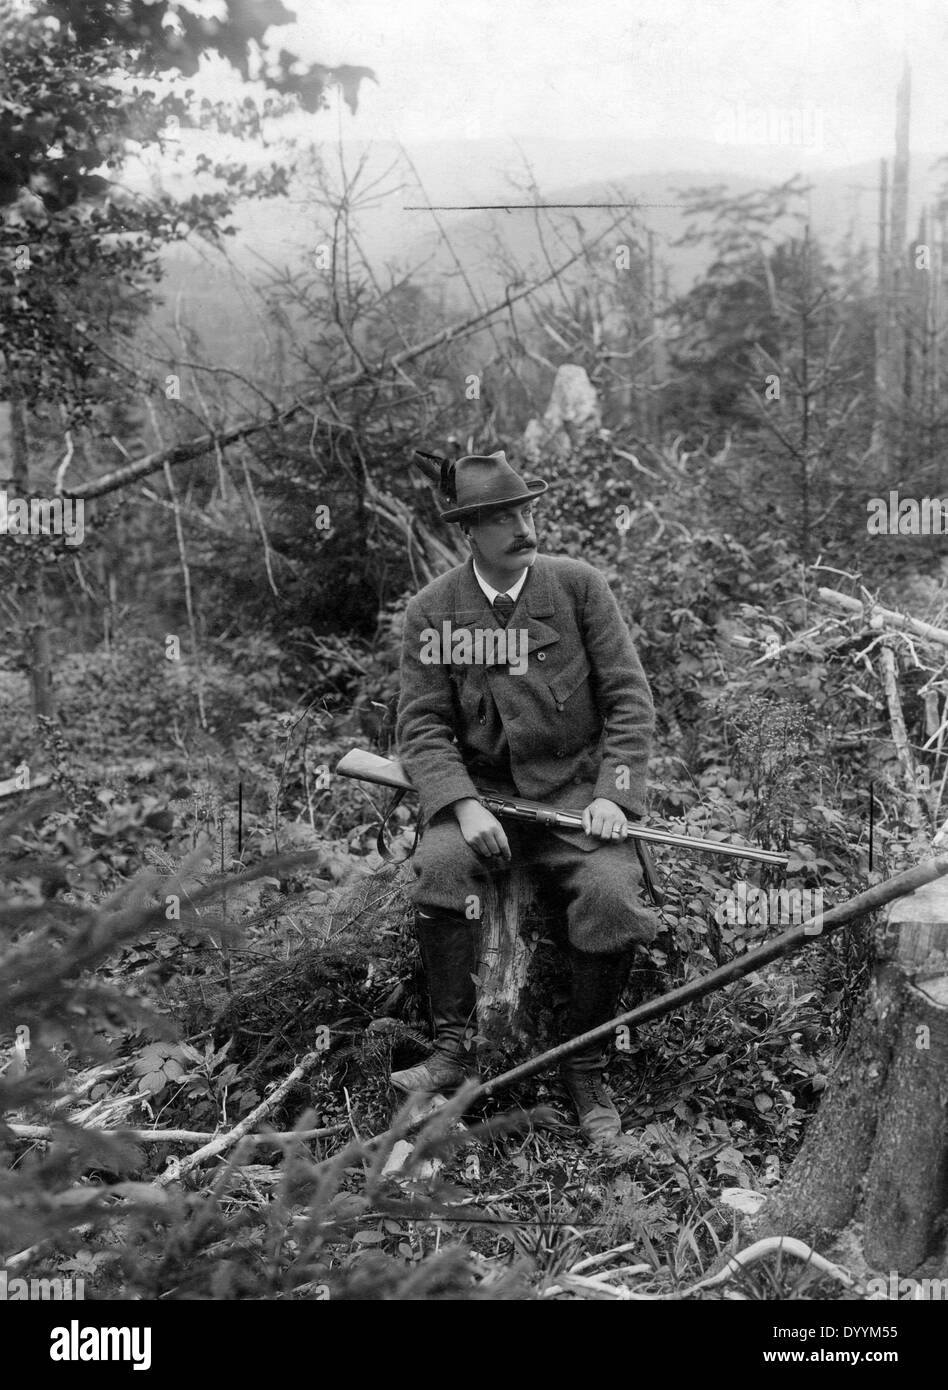 Archduke leopold salvator fotografías e imágenes de alta resolución - Alamy